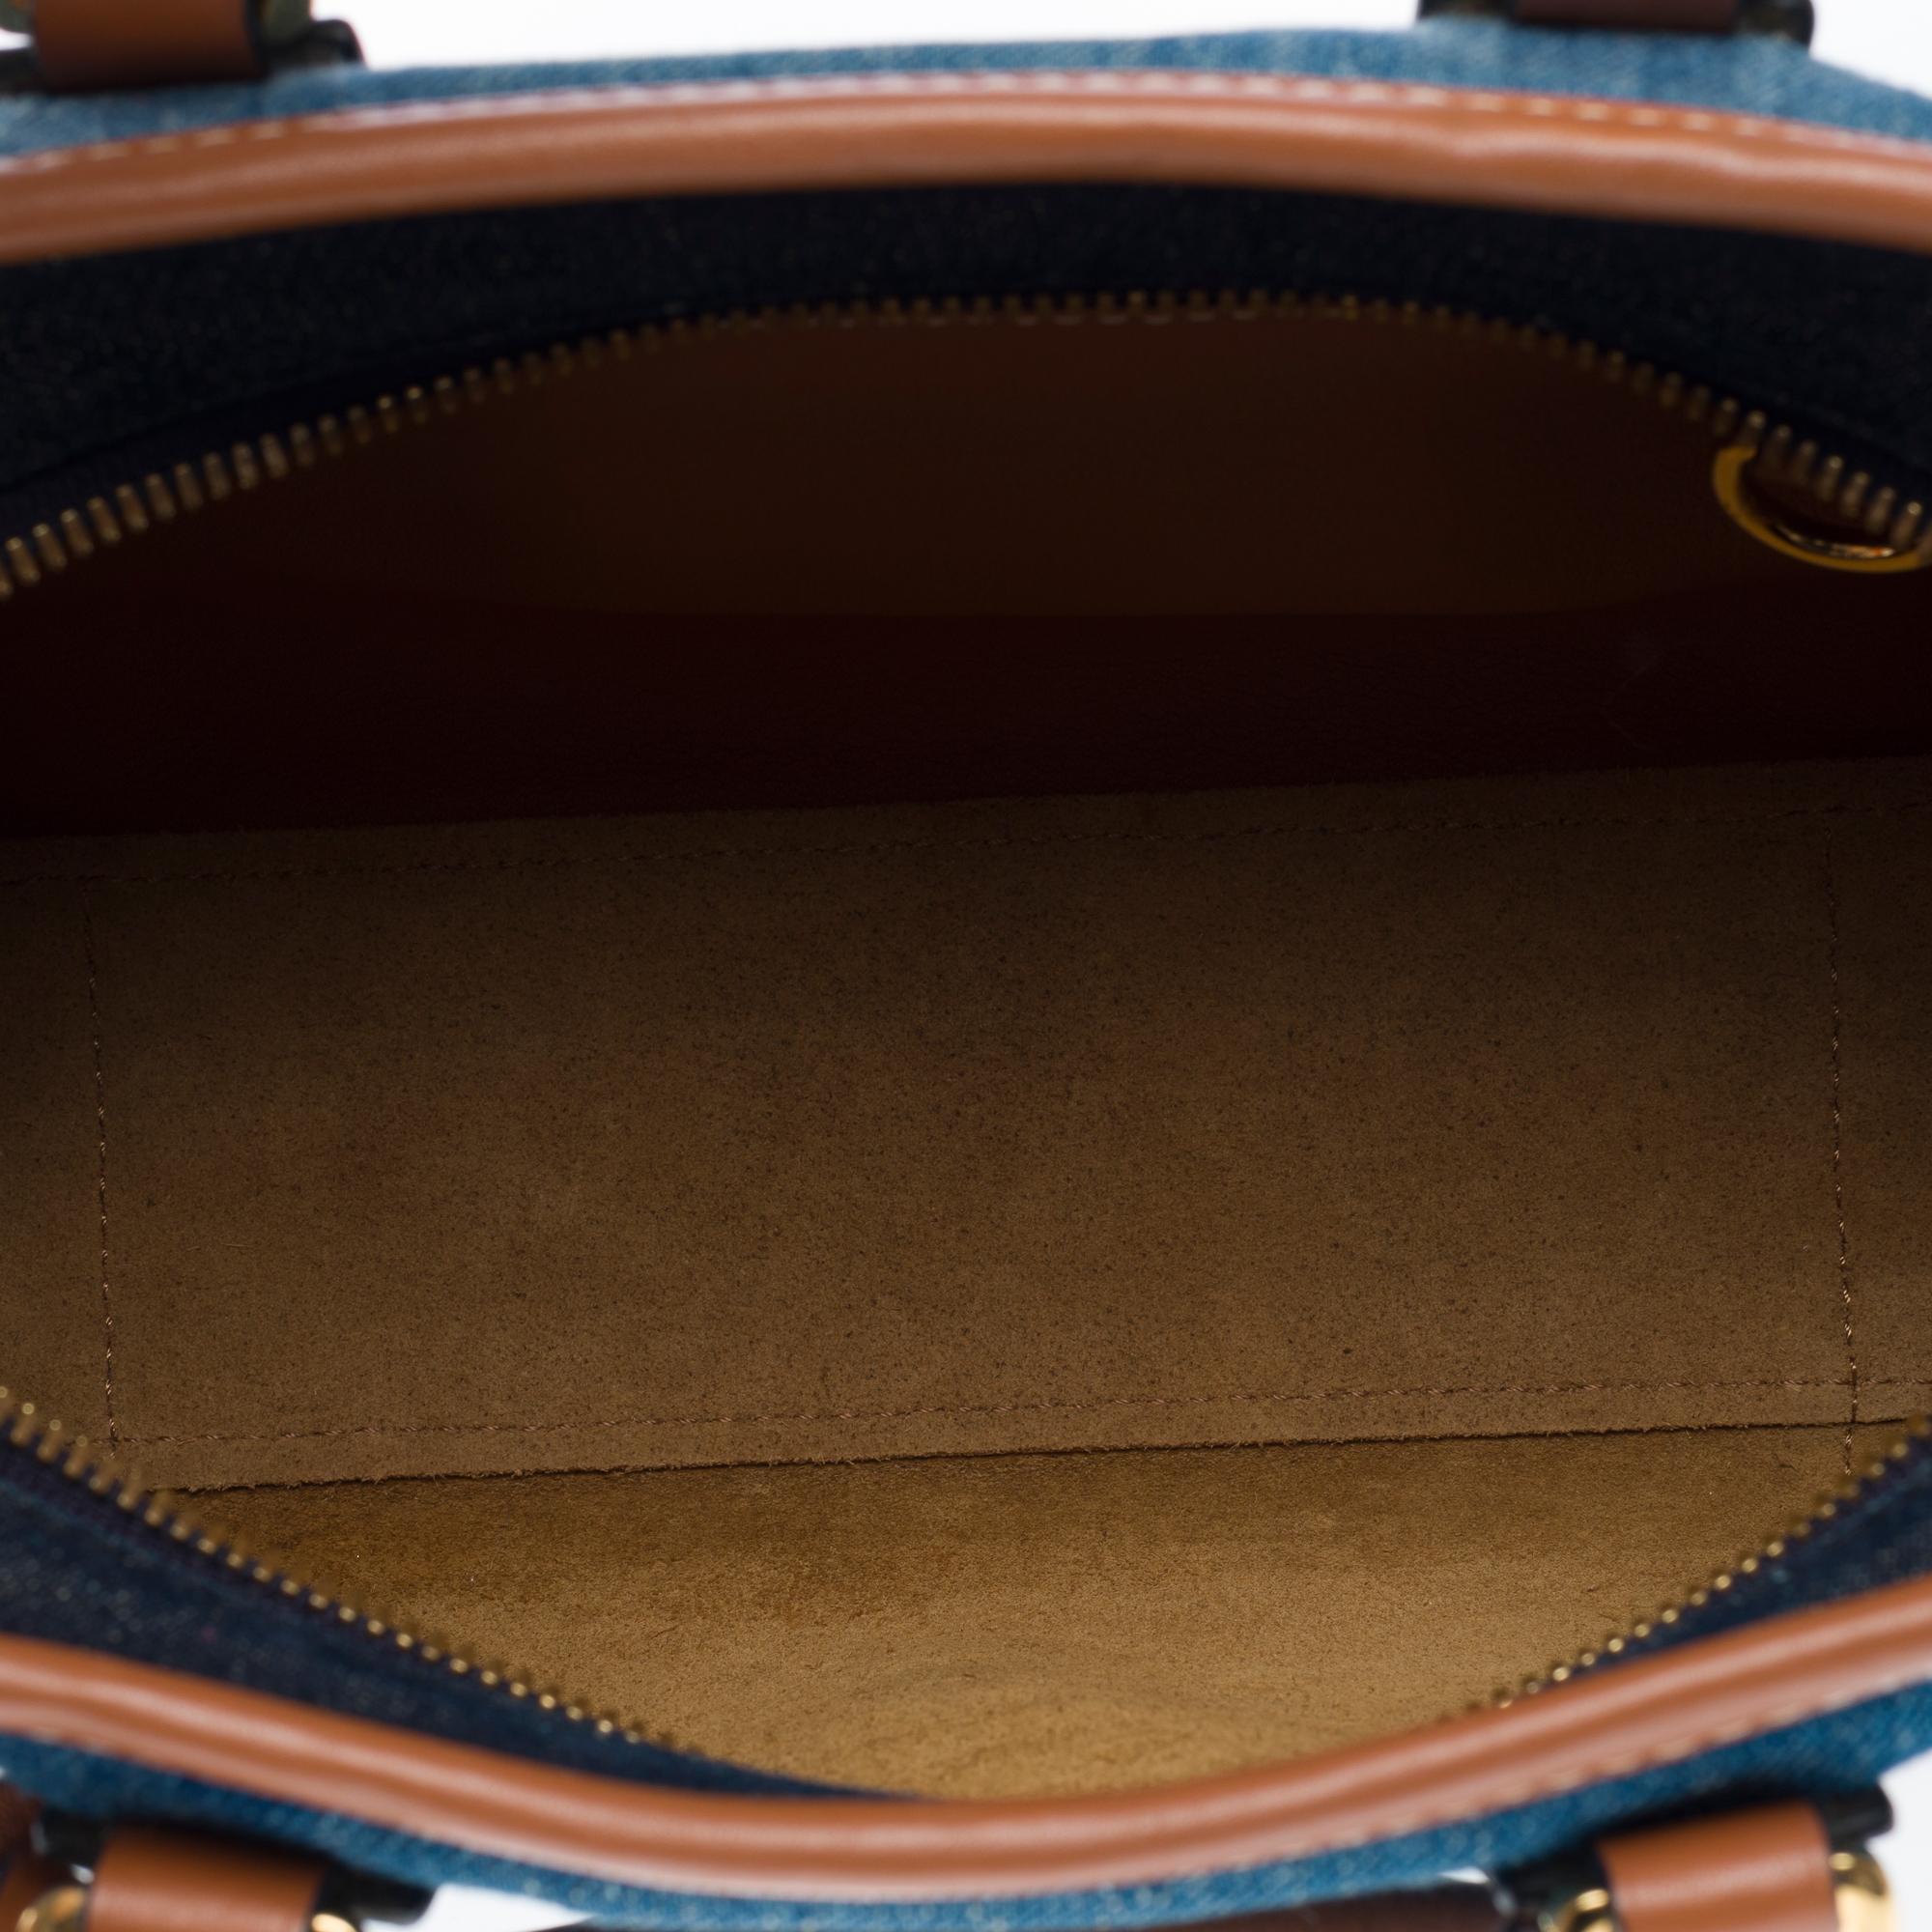 Loewe Amazona 23 2 Way handbag in denim and brown leather, GHW 4